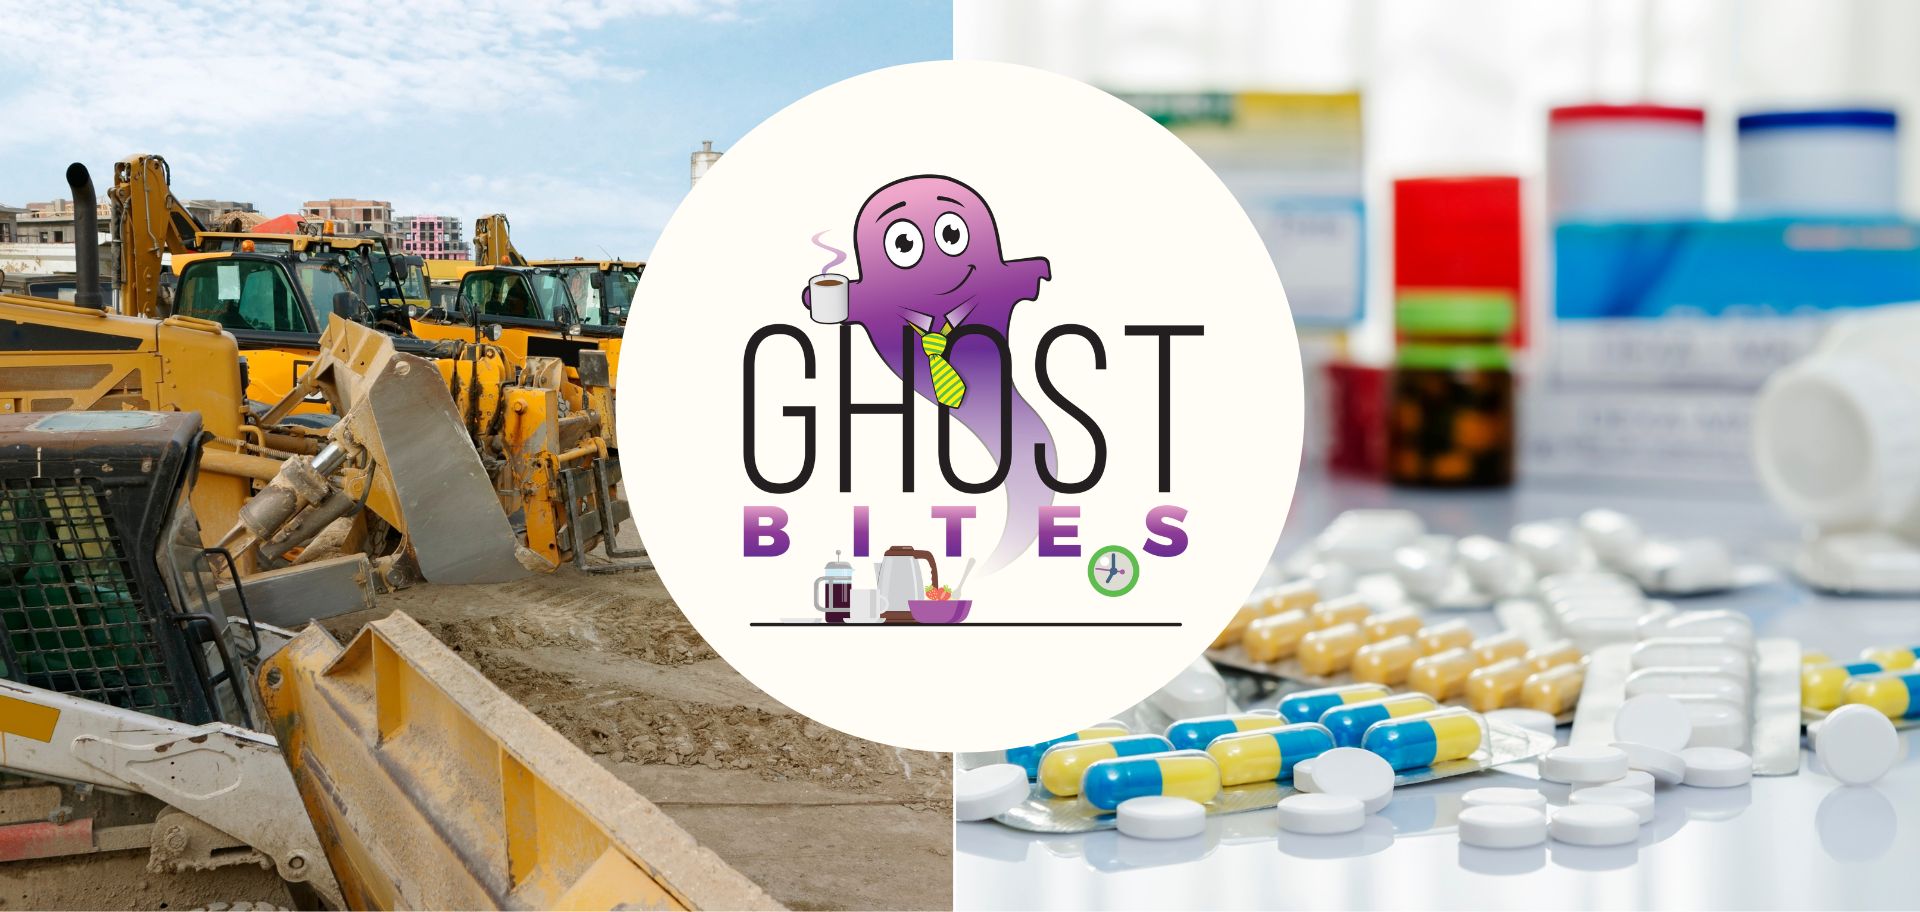 Ghost Bites (Absa | Aveng | Barloworld | Blue Label Telecoms | Dis-Chem | Discovery | Steinhoff)